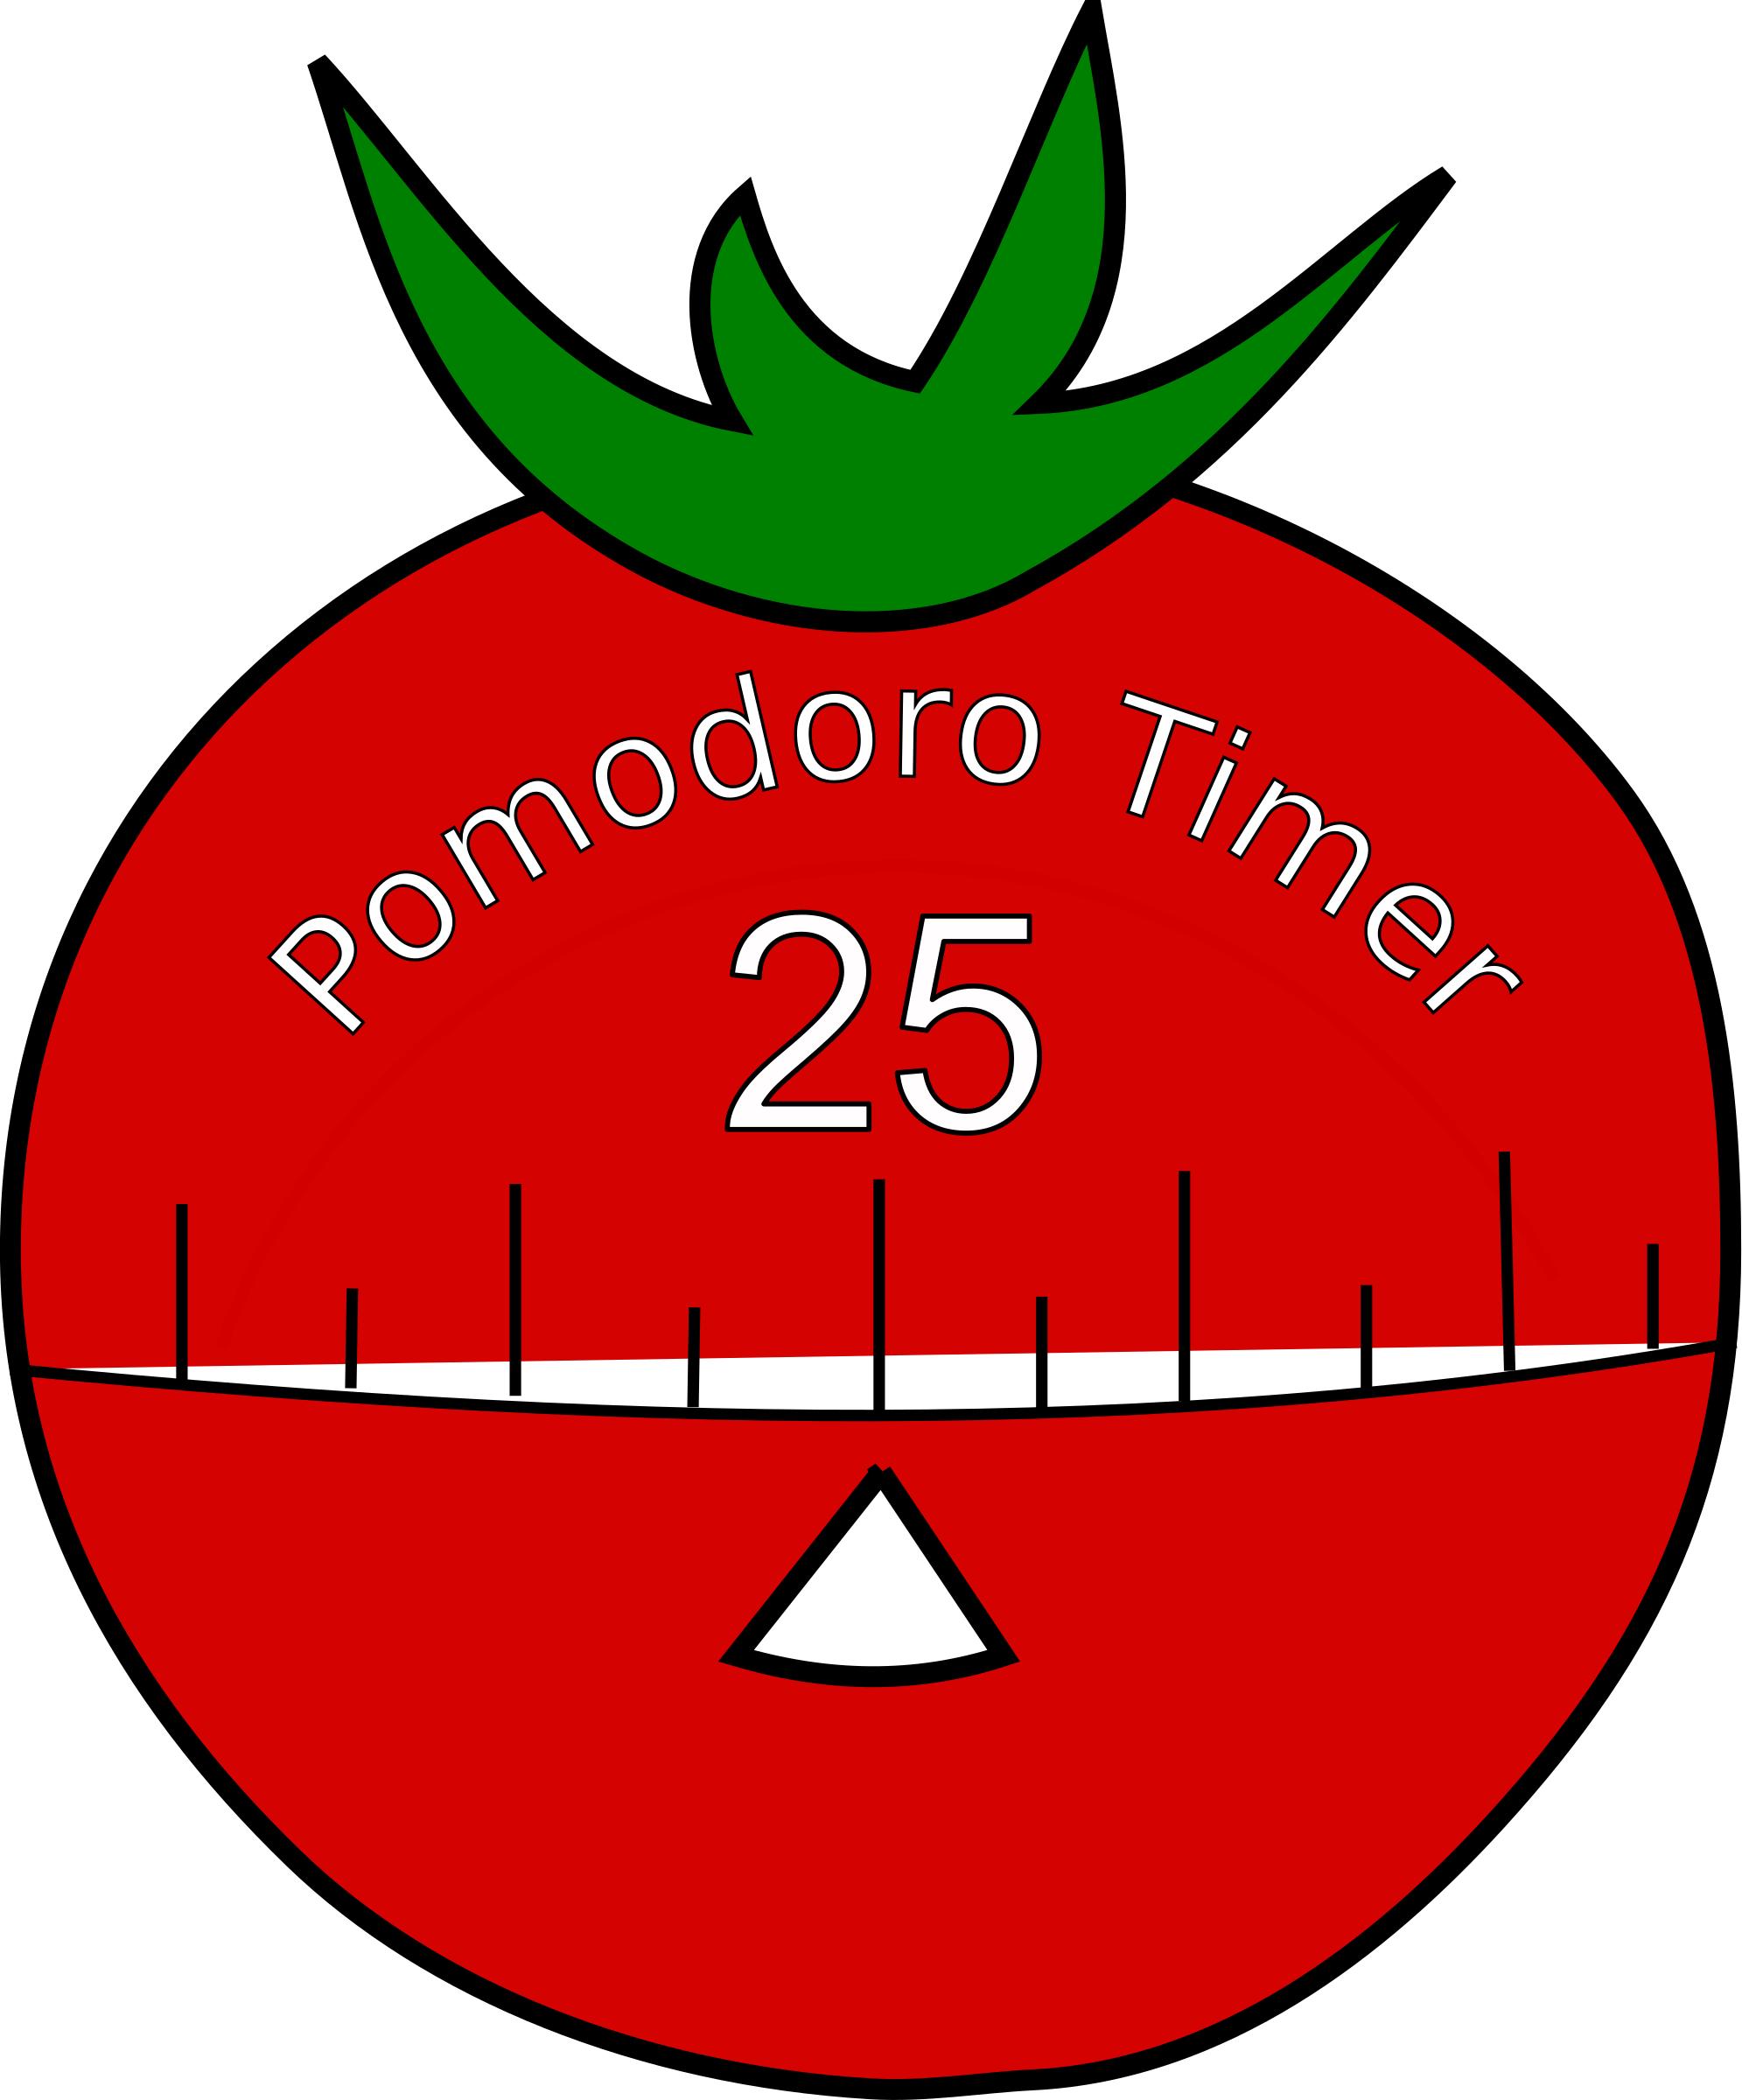 Pomodoro Timer png